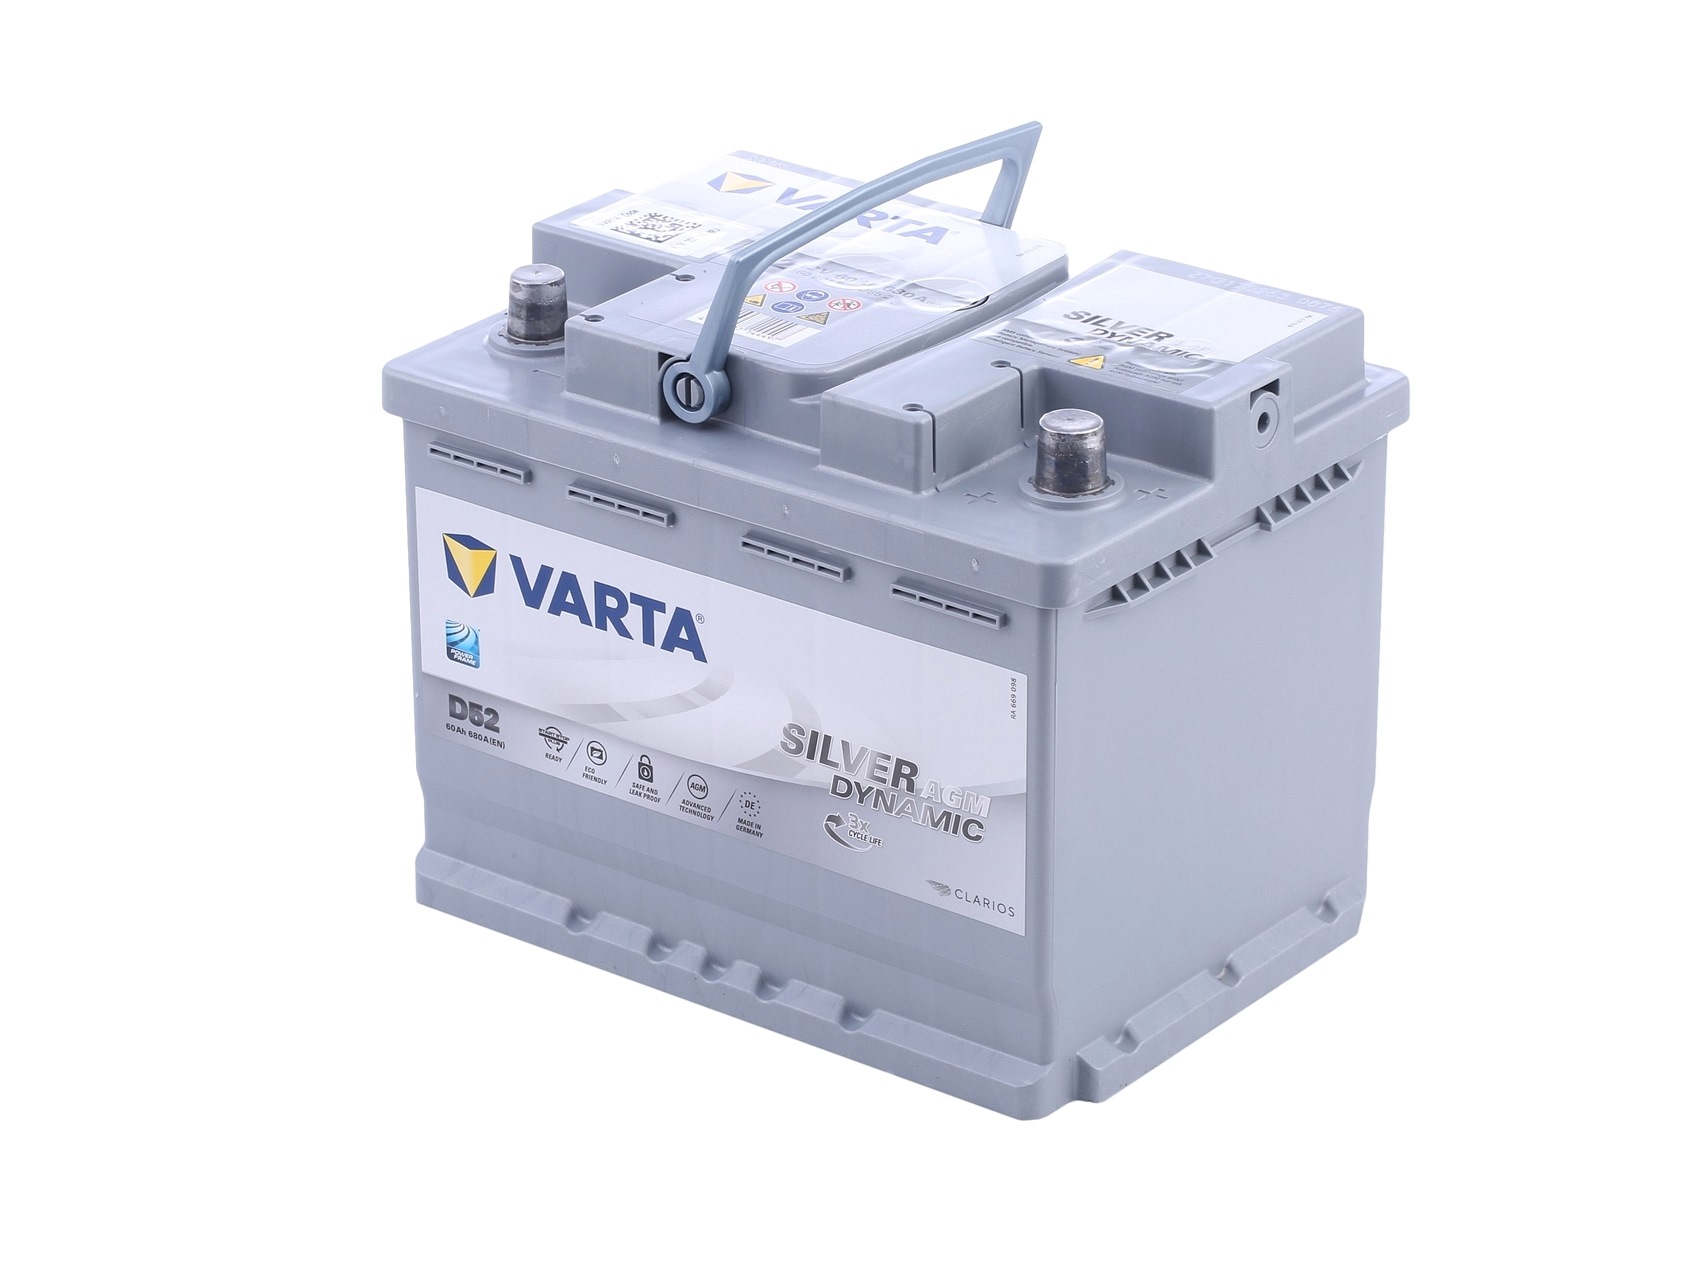 VARTA SILVER dynamic, D52 560901068D852 Batterie 12V 60Ah 680A B13 AGM-Batterie